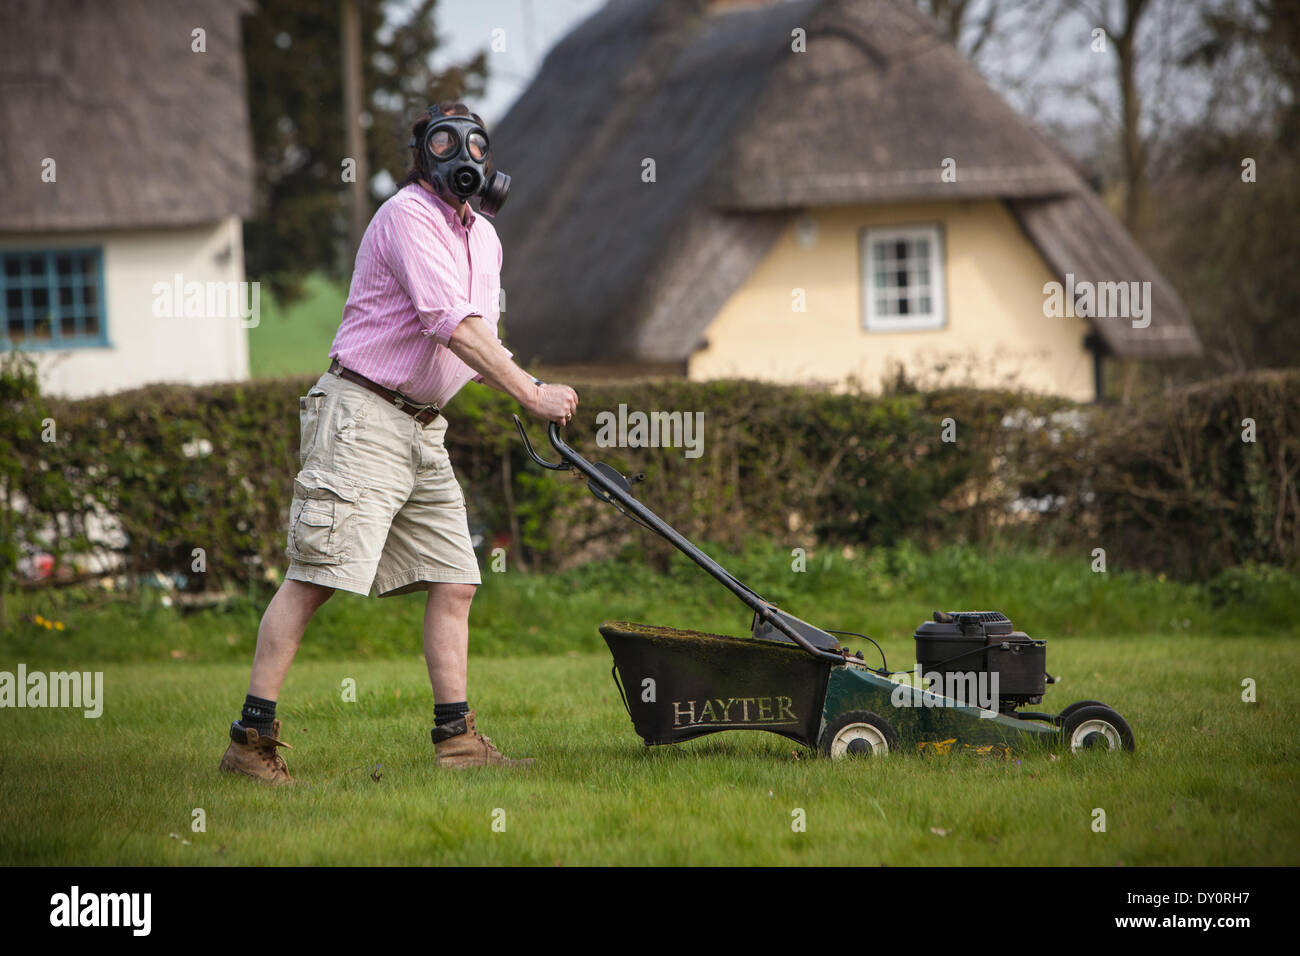 https://c8.alamy.com/comp/DY0RH7/arkesden-essex-man-mowing-the-lawn-wearing-a-gas-mask-as-a-precaution-DY0RH7.jpg